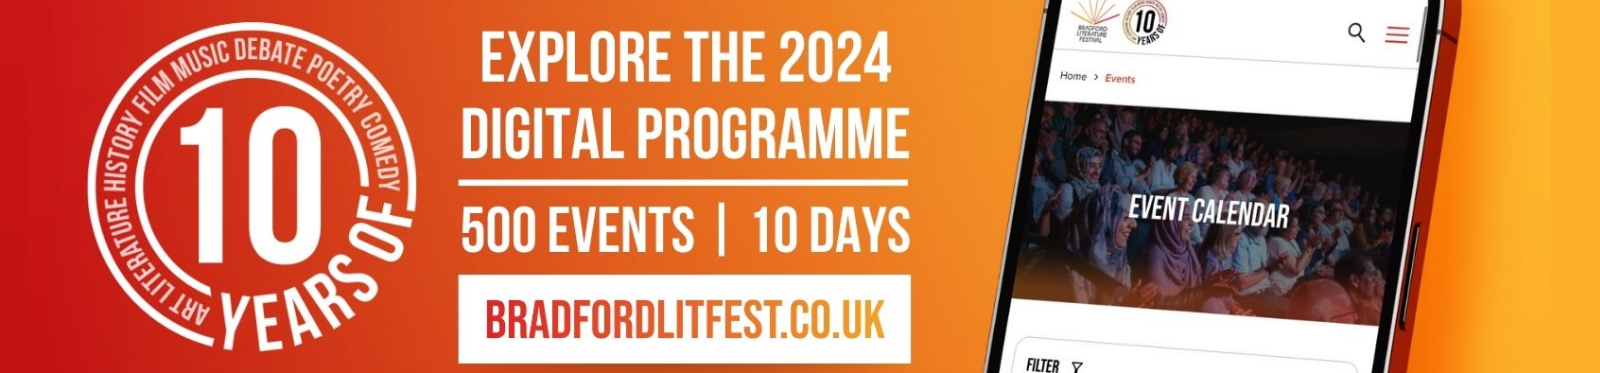 Bradford Literature Festival 2024